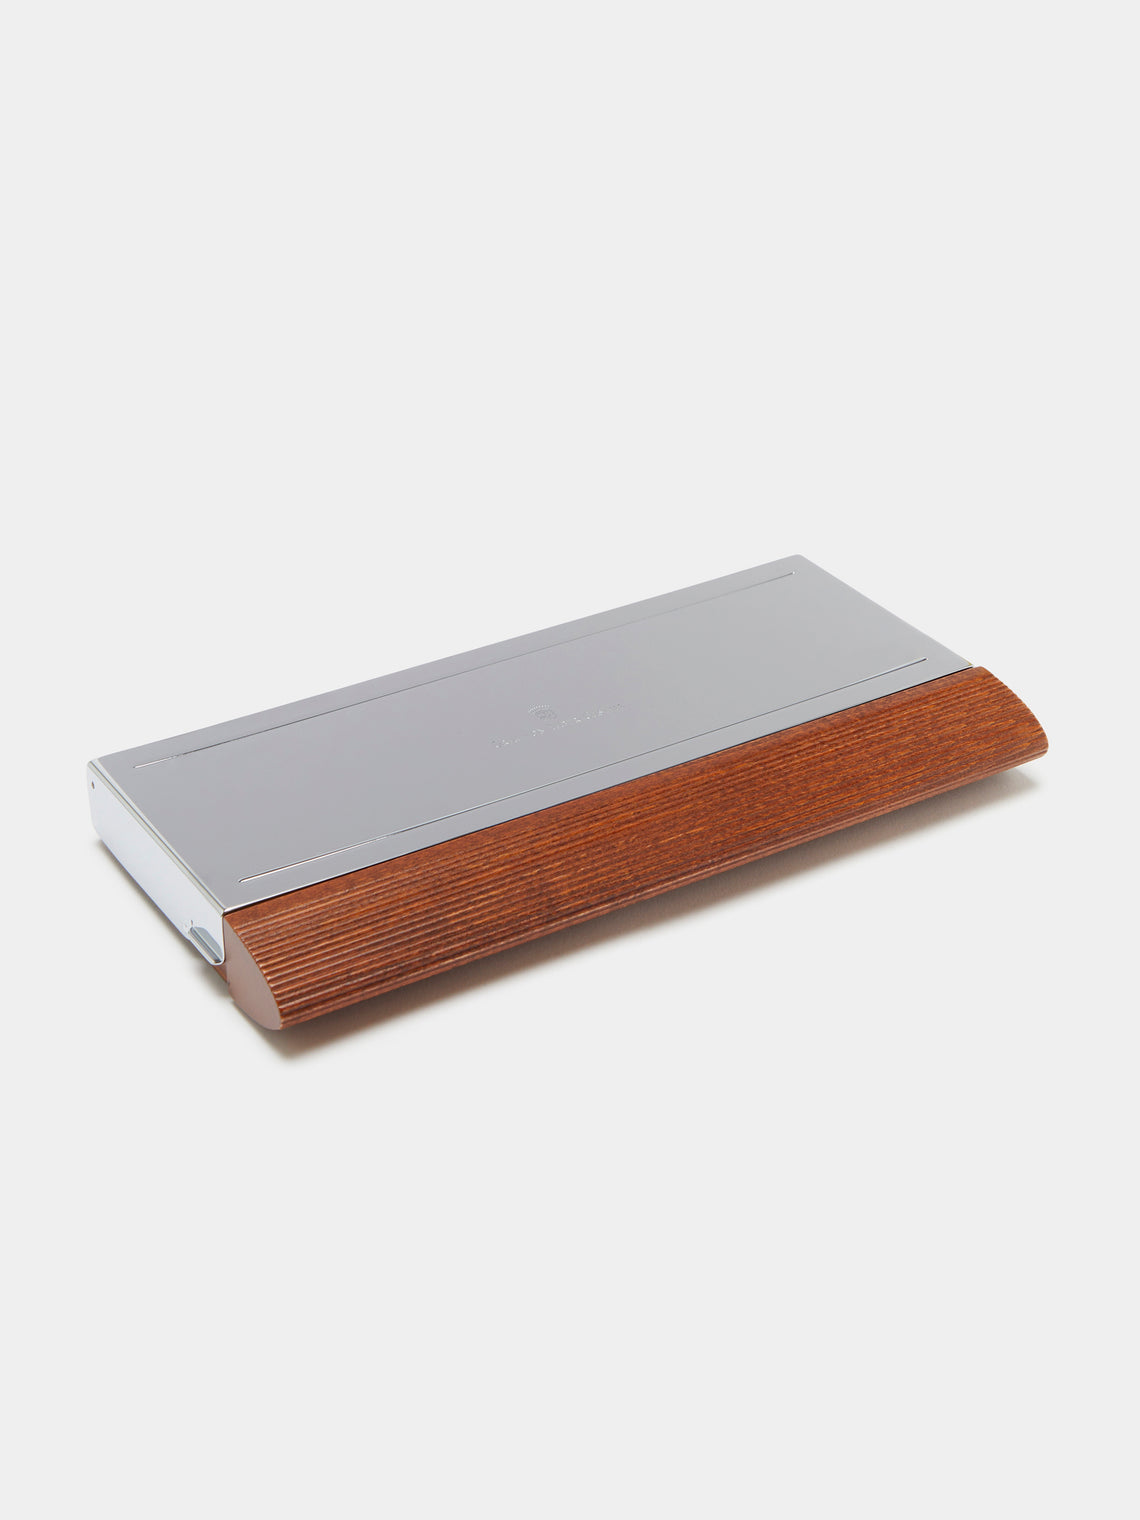 Graf von Faber-Castell - Platinum Plated Perfect Pencil Desk Set - Brown - ABASK